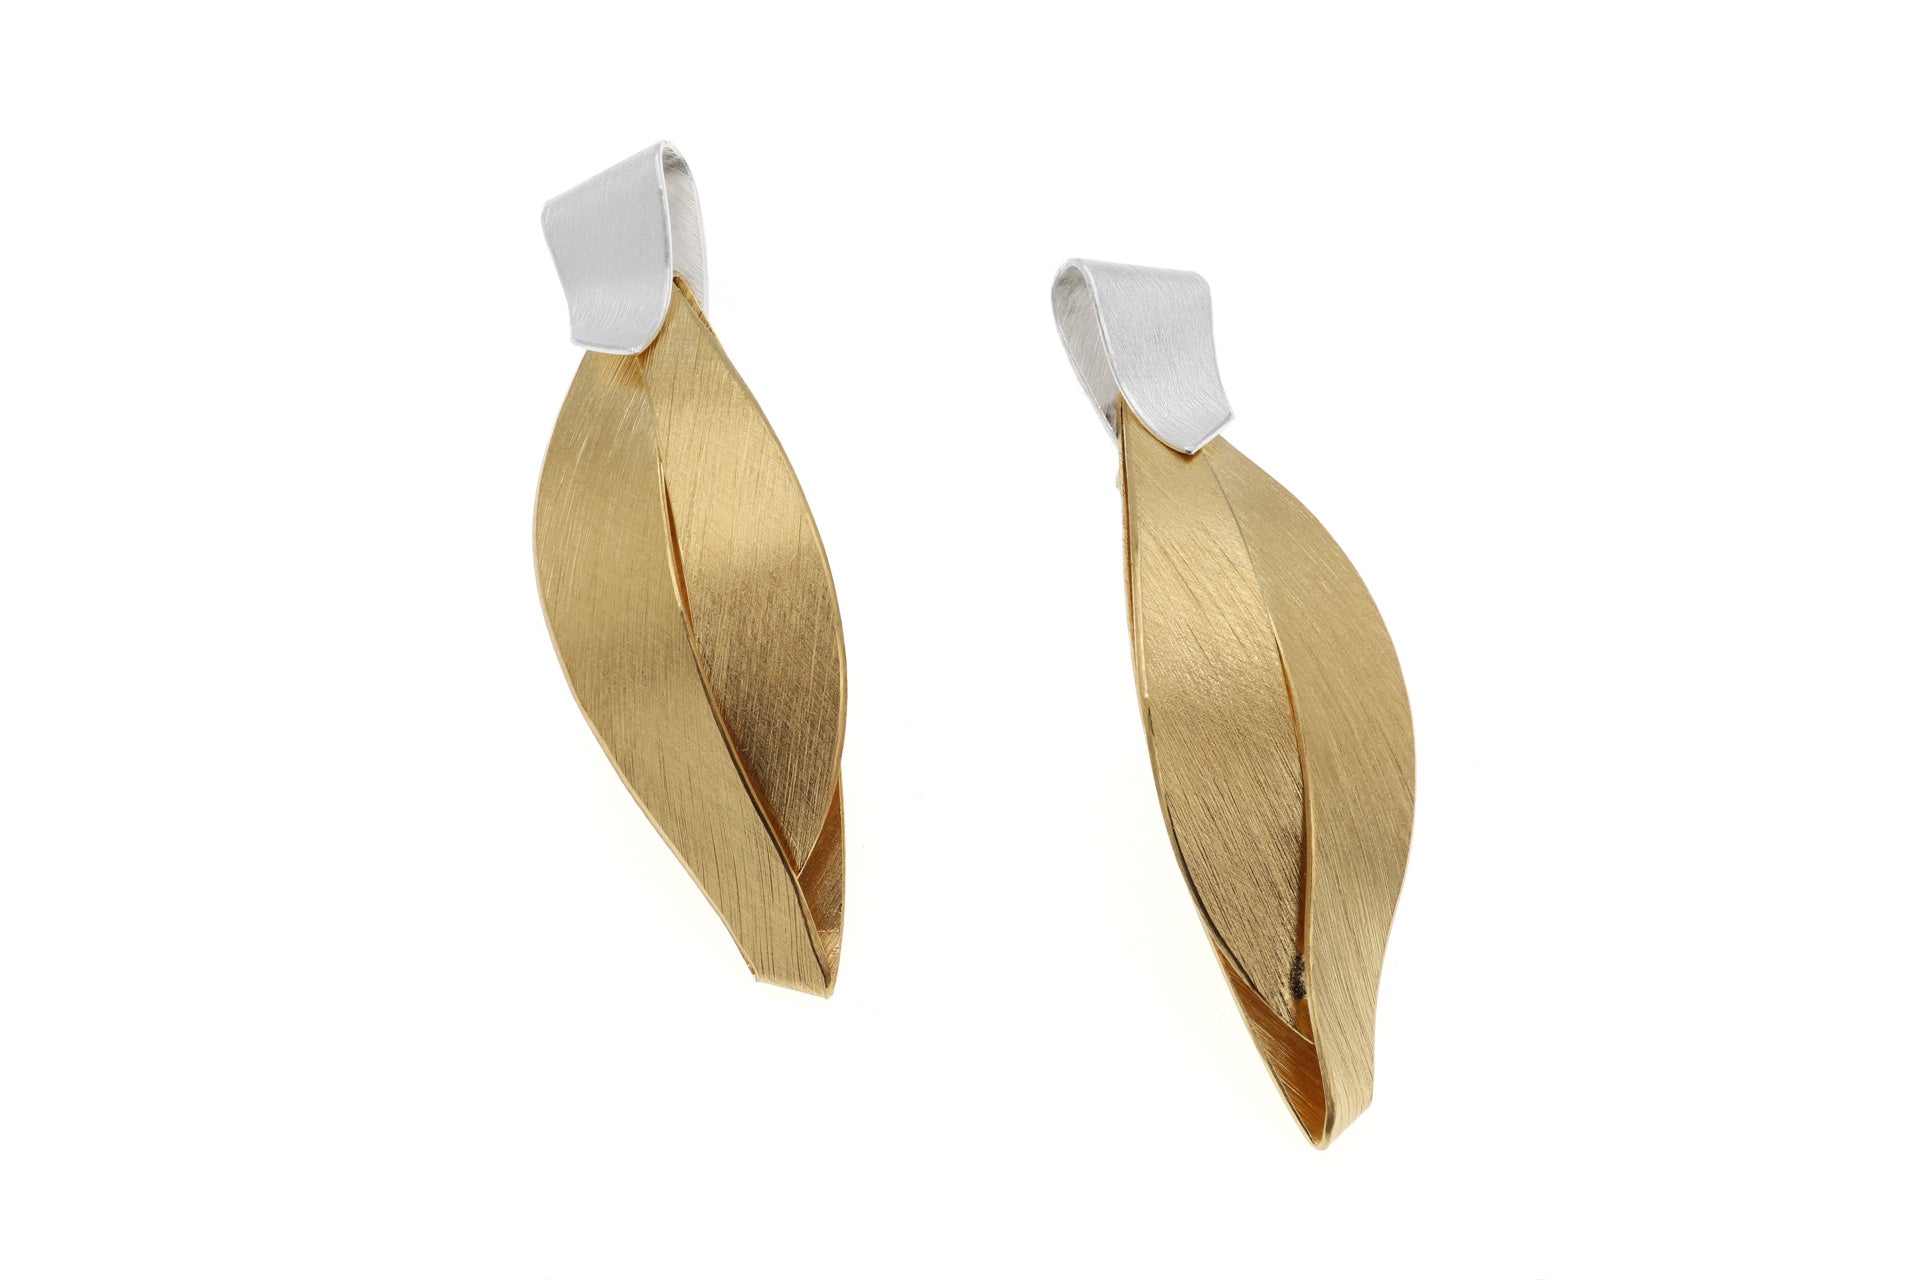 Gold Flowing Earrings - The Nancy Smillie Shop - Art, Jewellery & Designer Gifts Glasgow